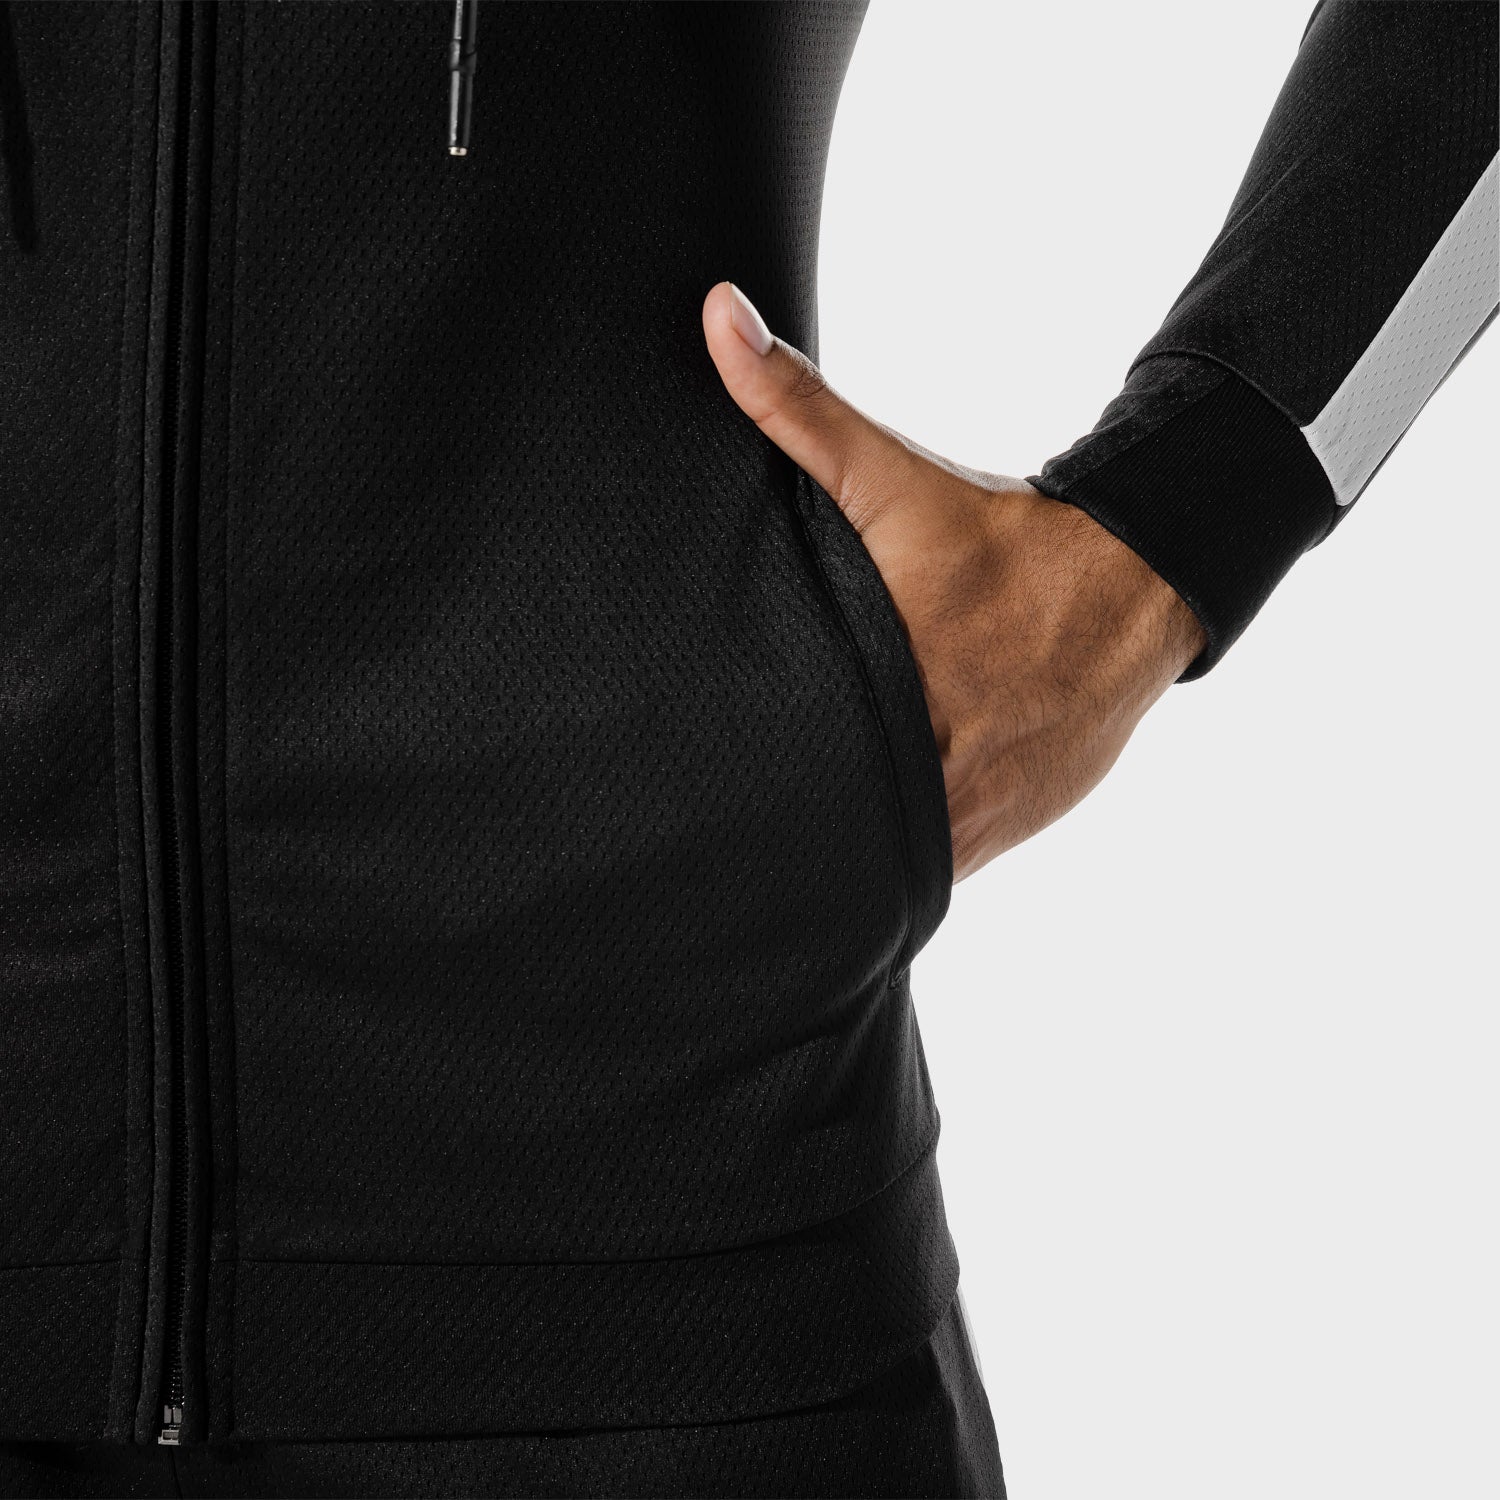 squatwolf-gym-wear-hybrid-zip-up-black-workout-hoodies-for-men